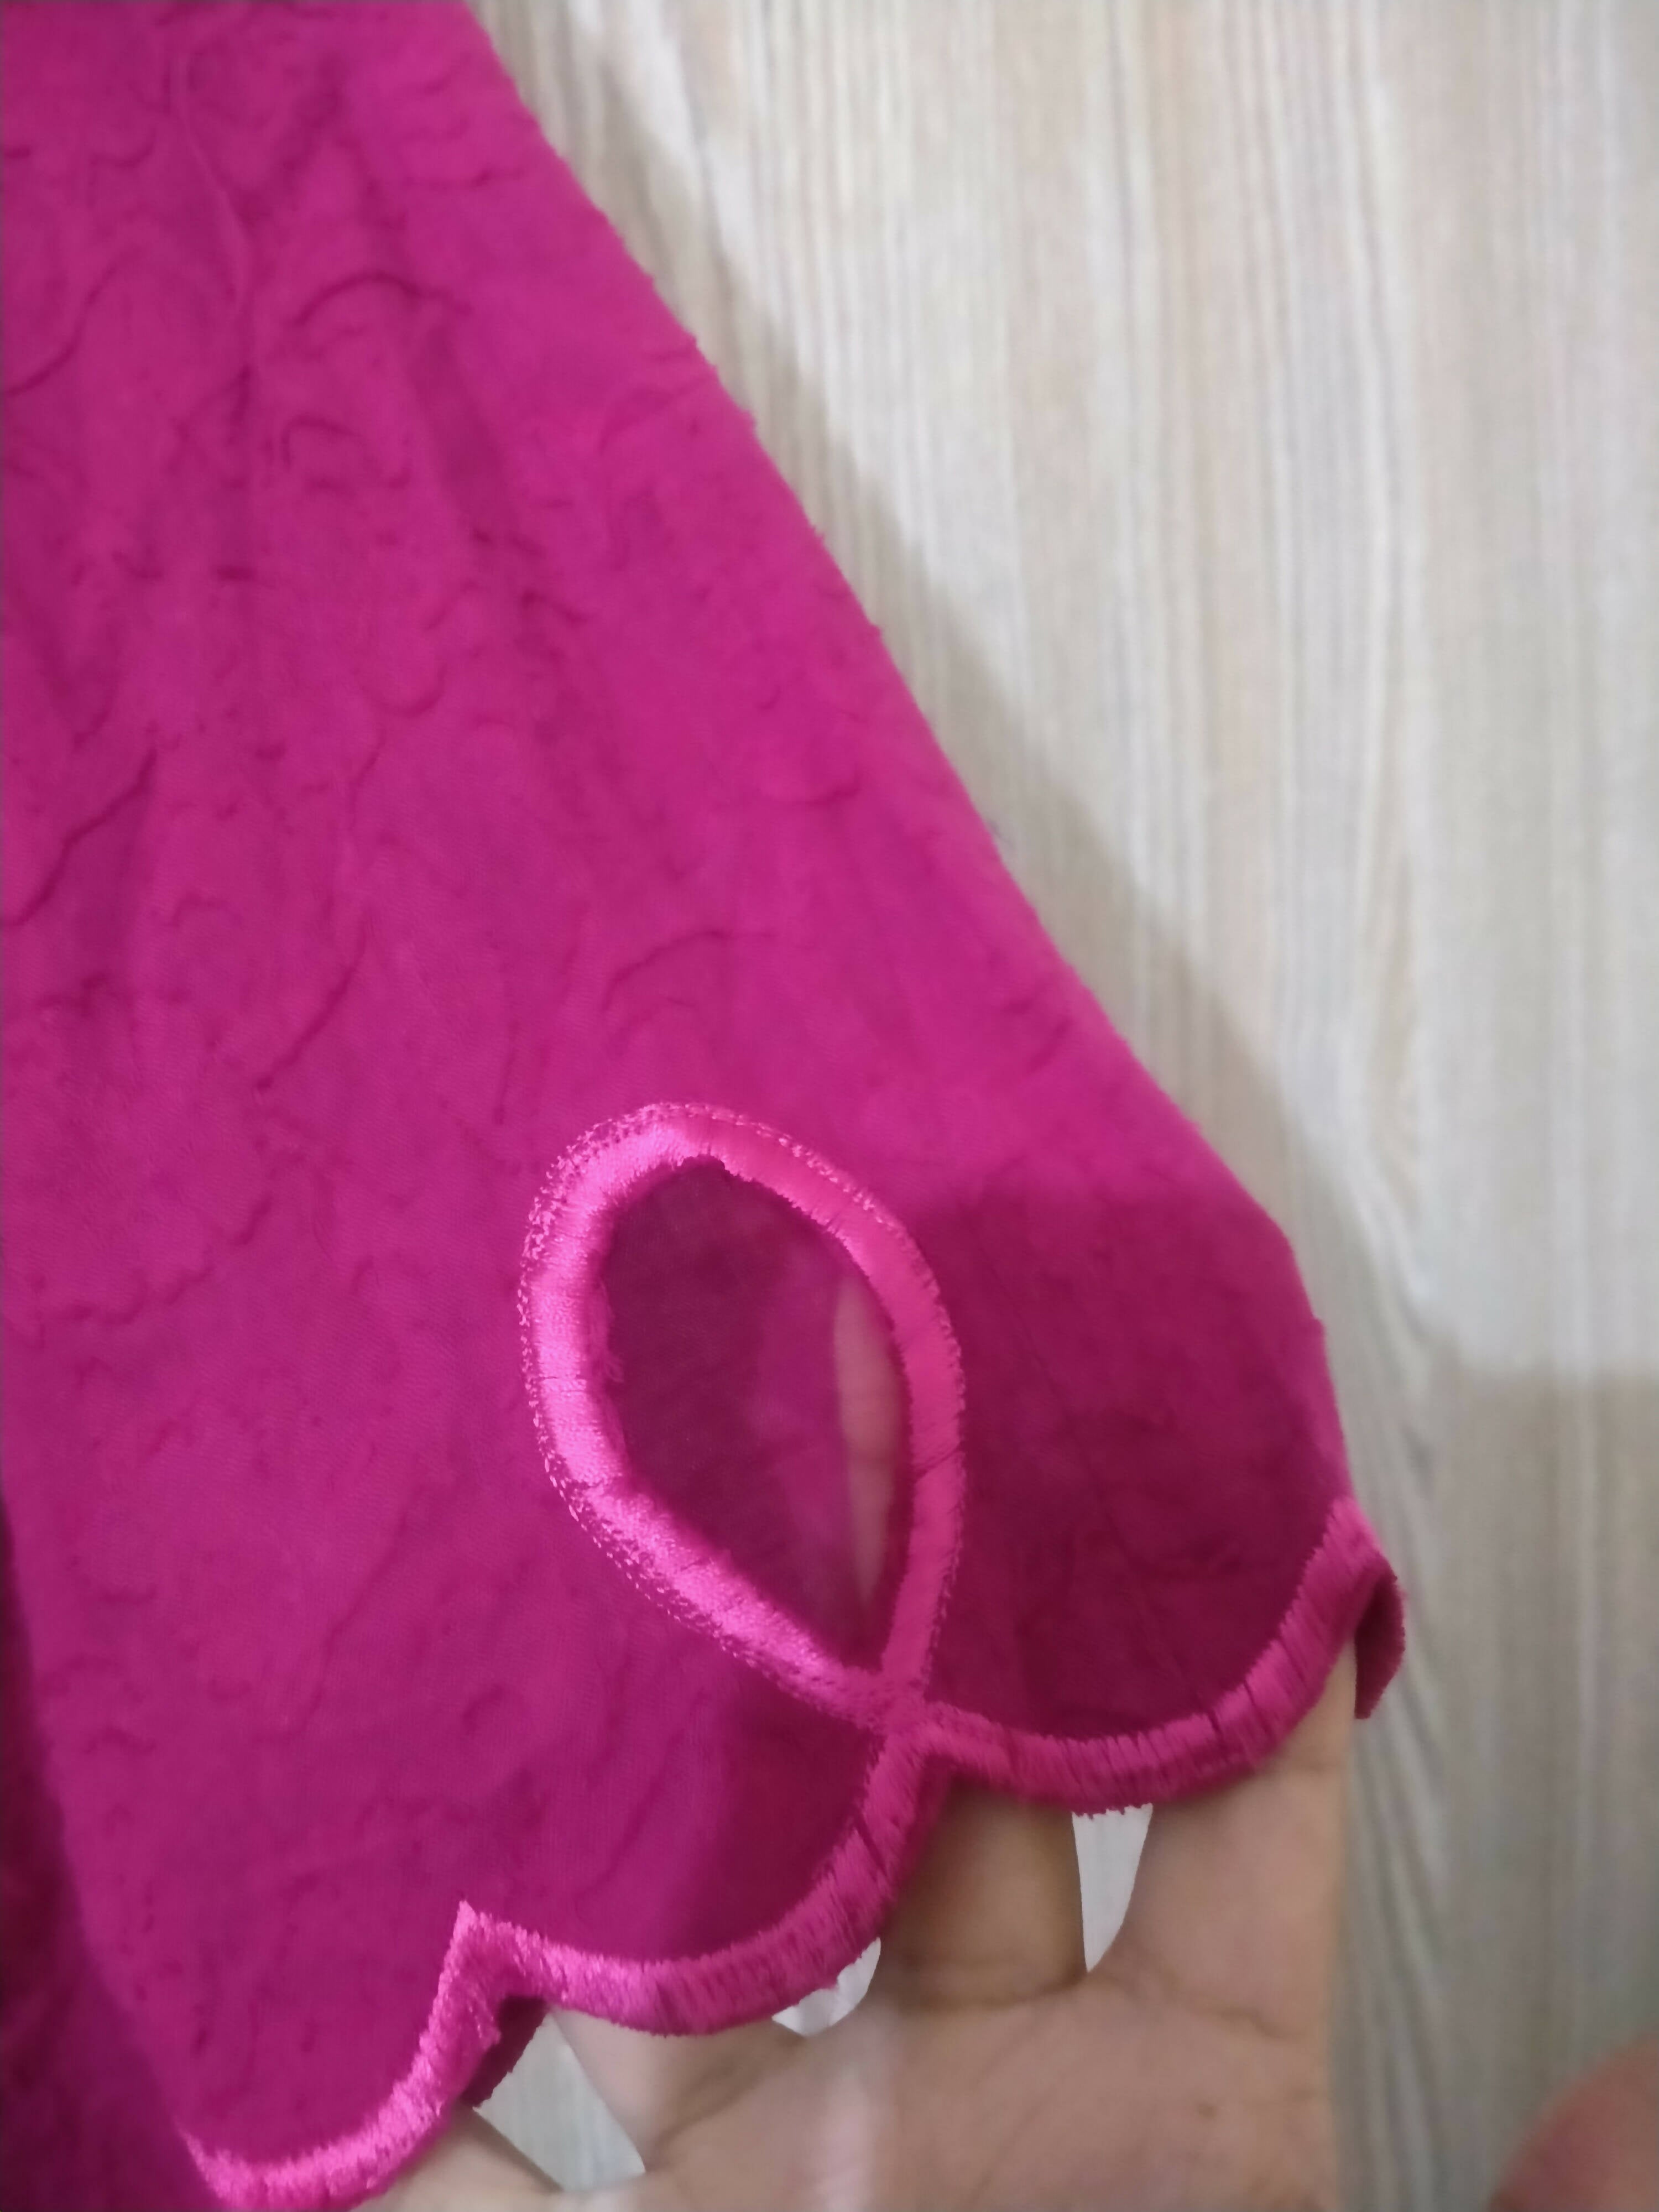 Sapphire | Brosha embroided 2 piece dress (Size: M ) | Women Branded Kurta | New